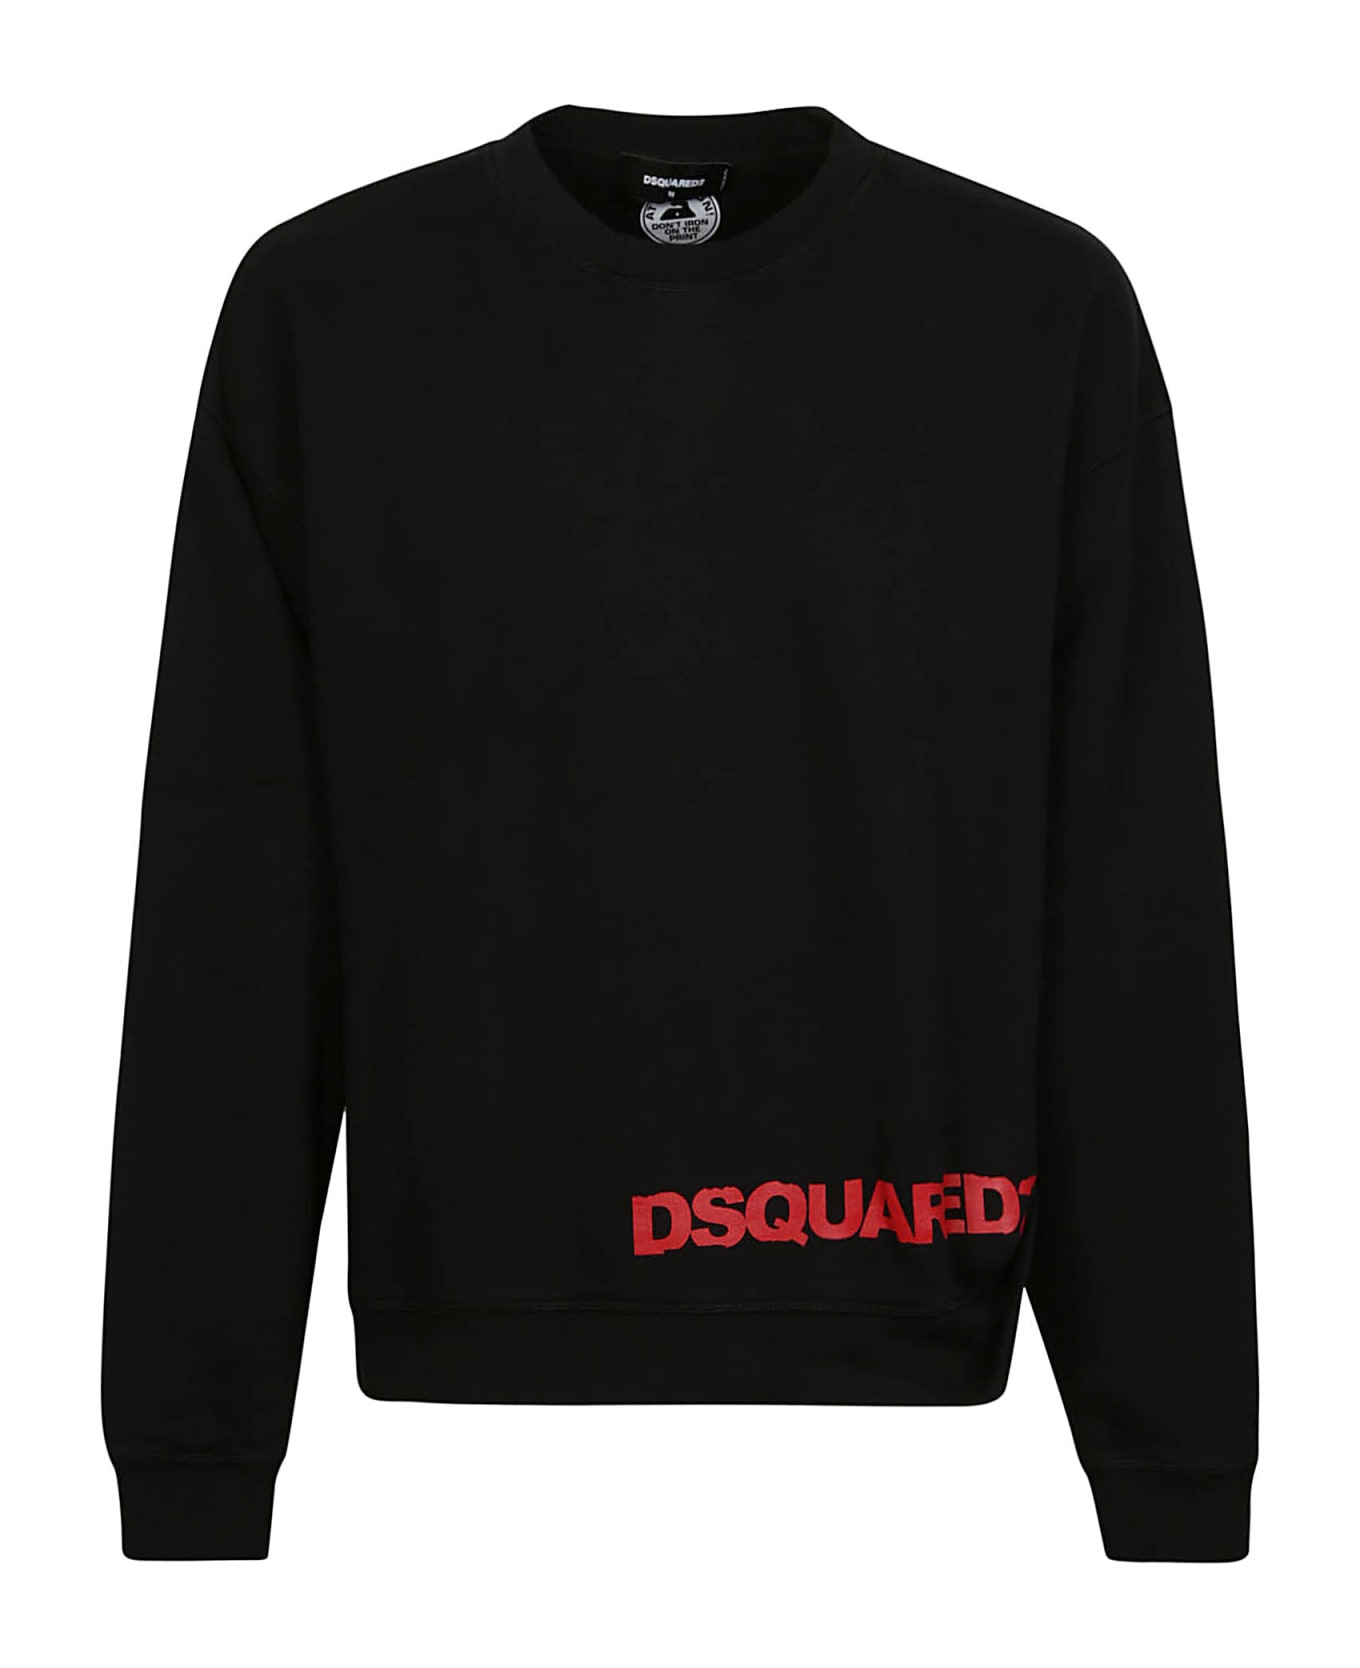 Dsquared2 Relax Fit Sweatshirt - Black